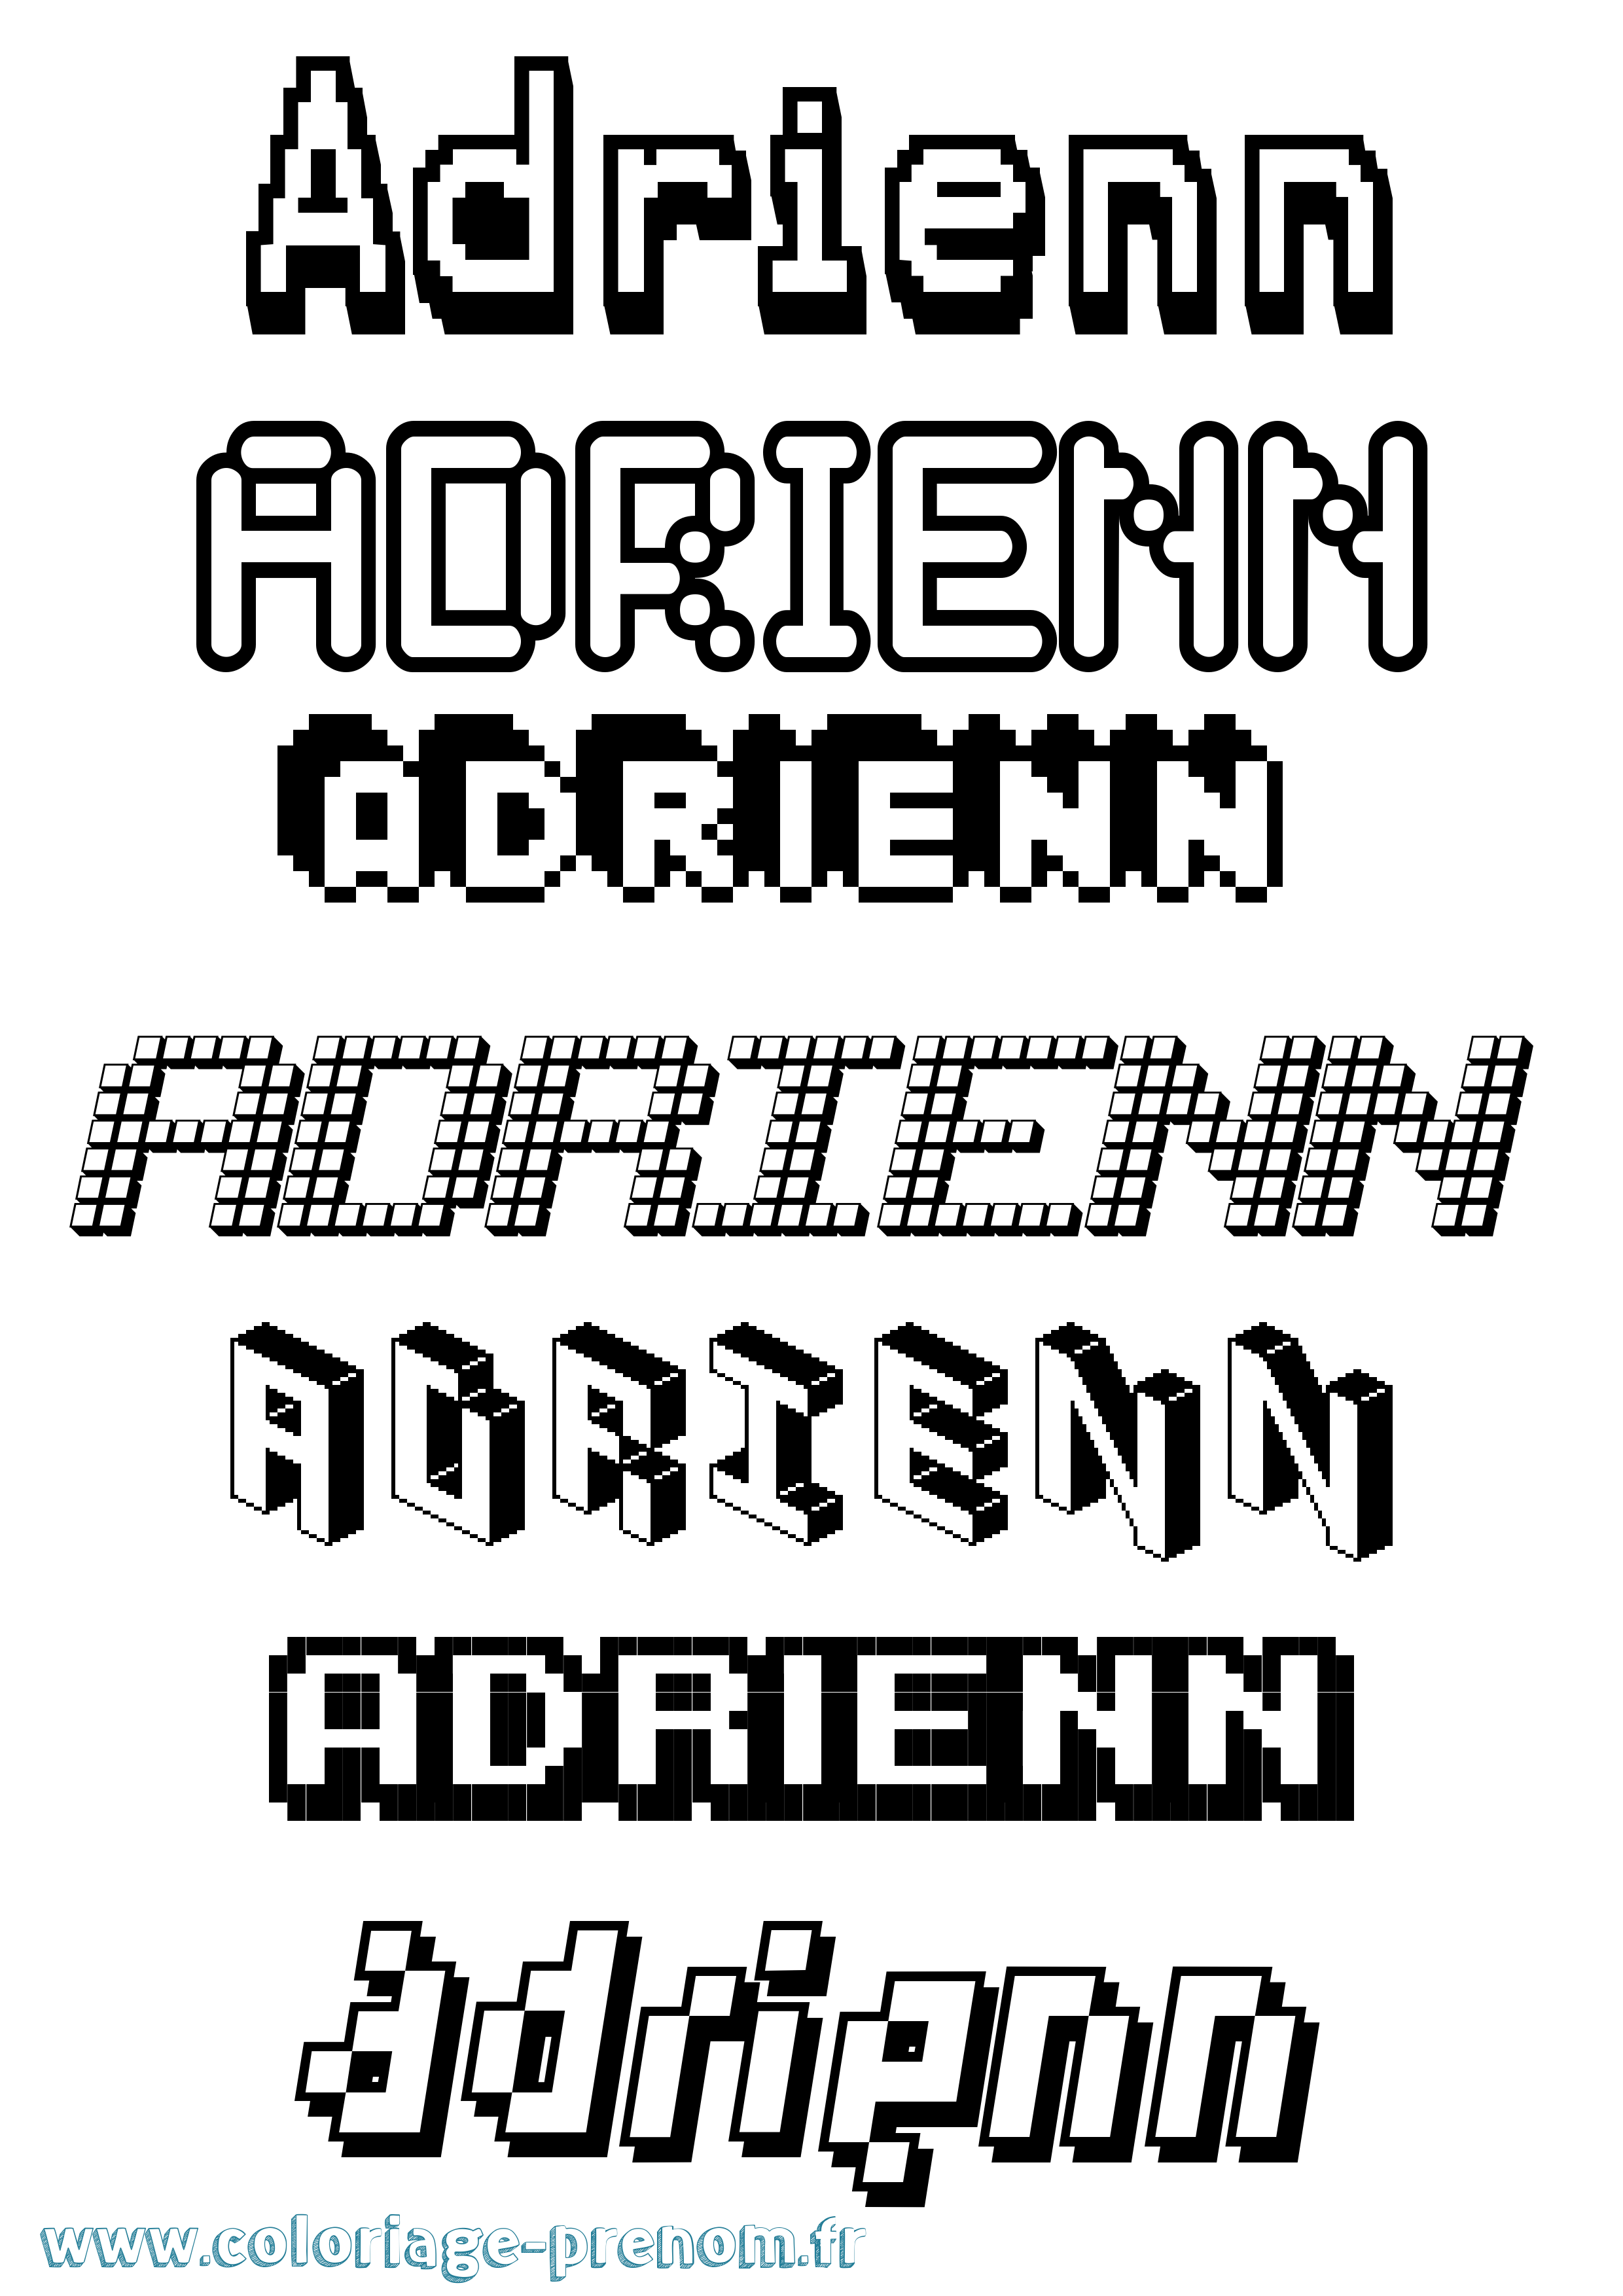 Coloriage prénom Adrienn Pixel